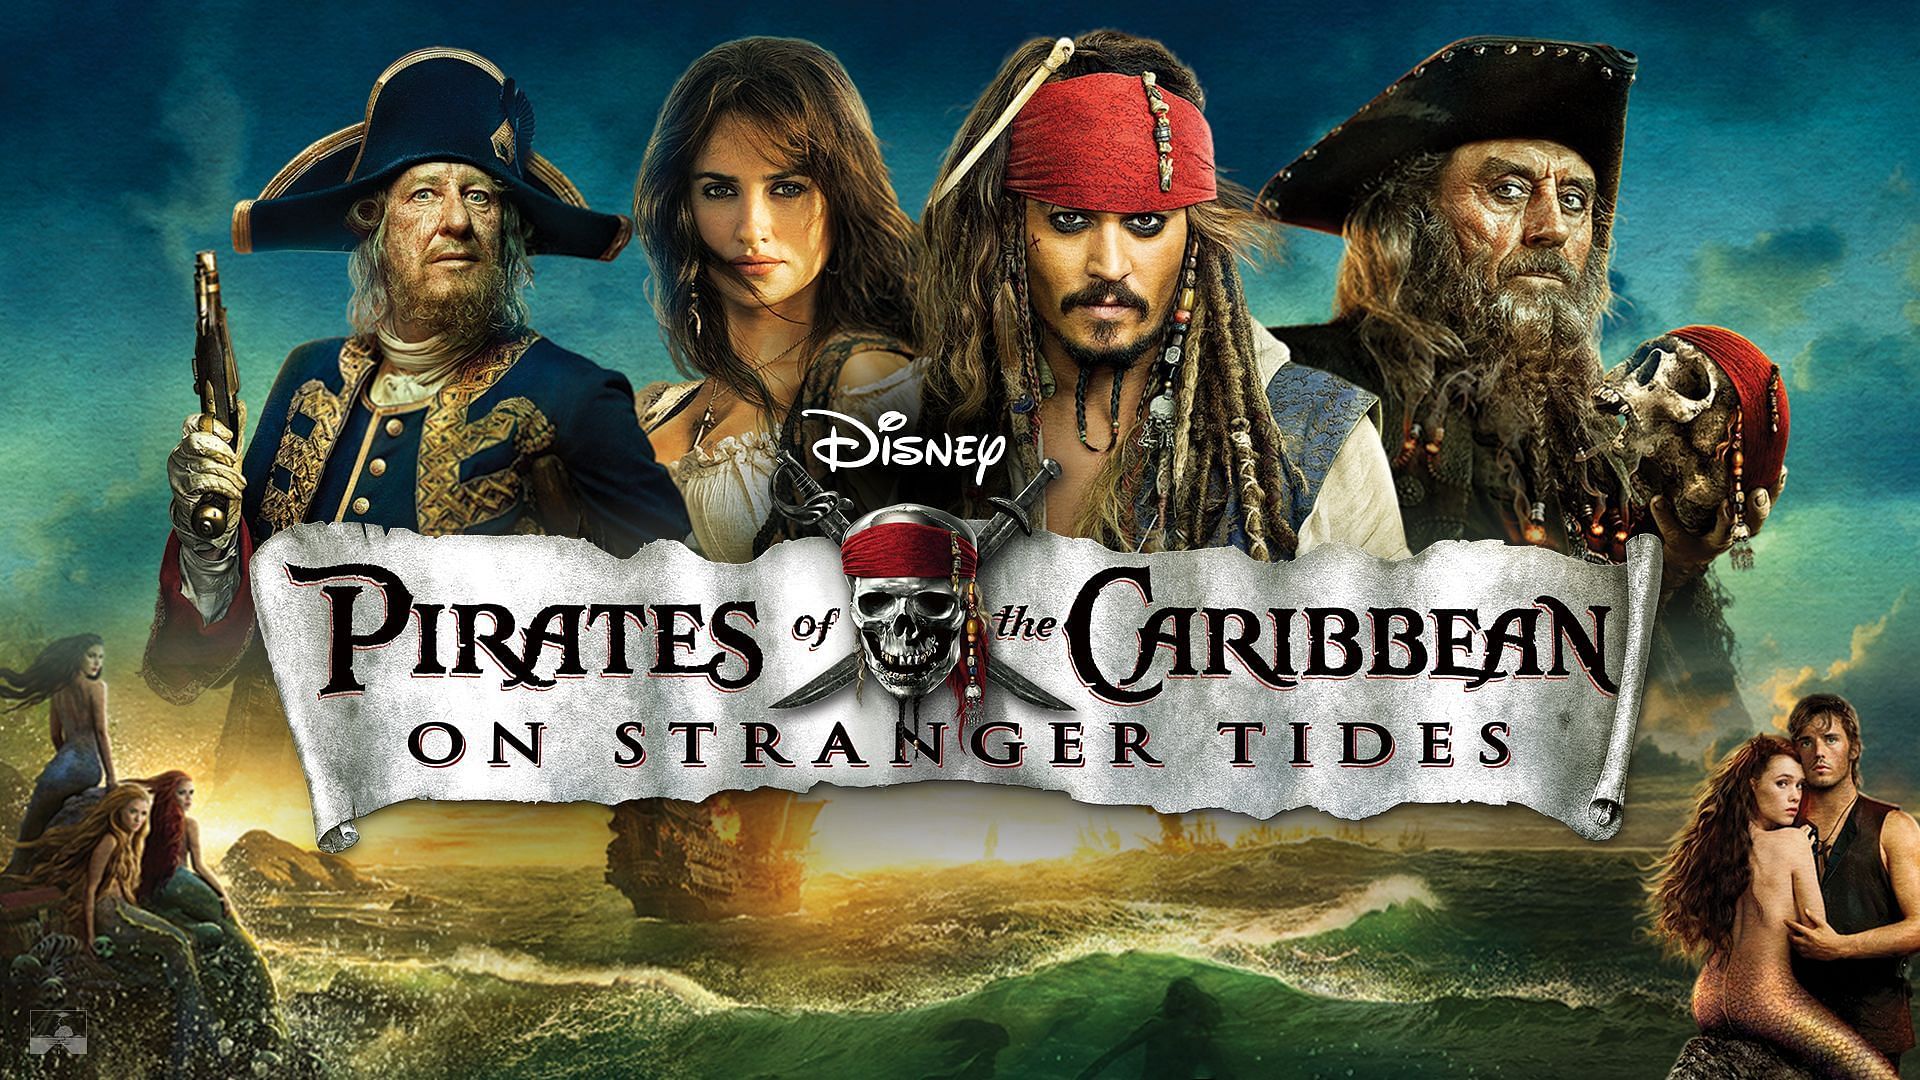 Pirates of the Caribbean: On Stranger Tides (Image via Walt Disney Studios)